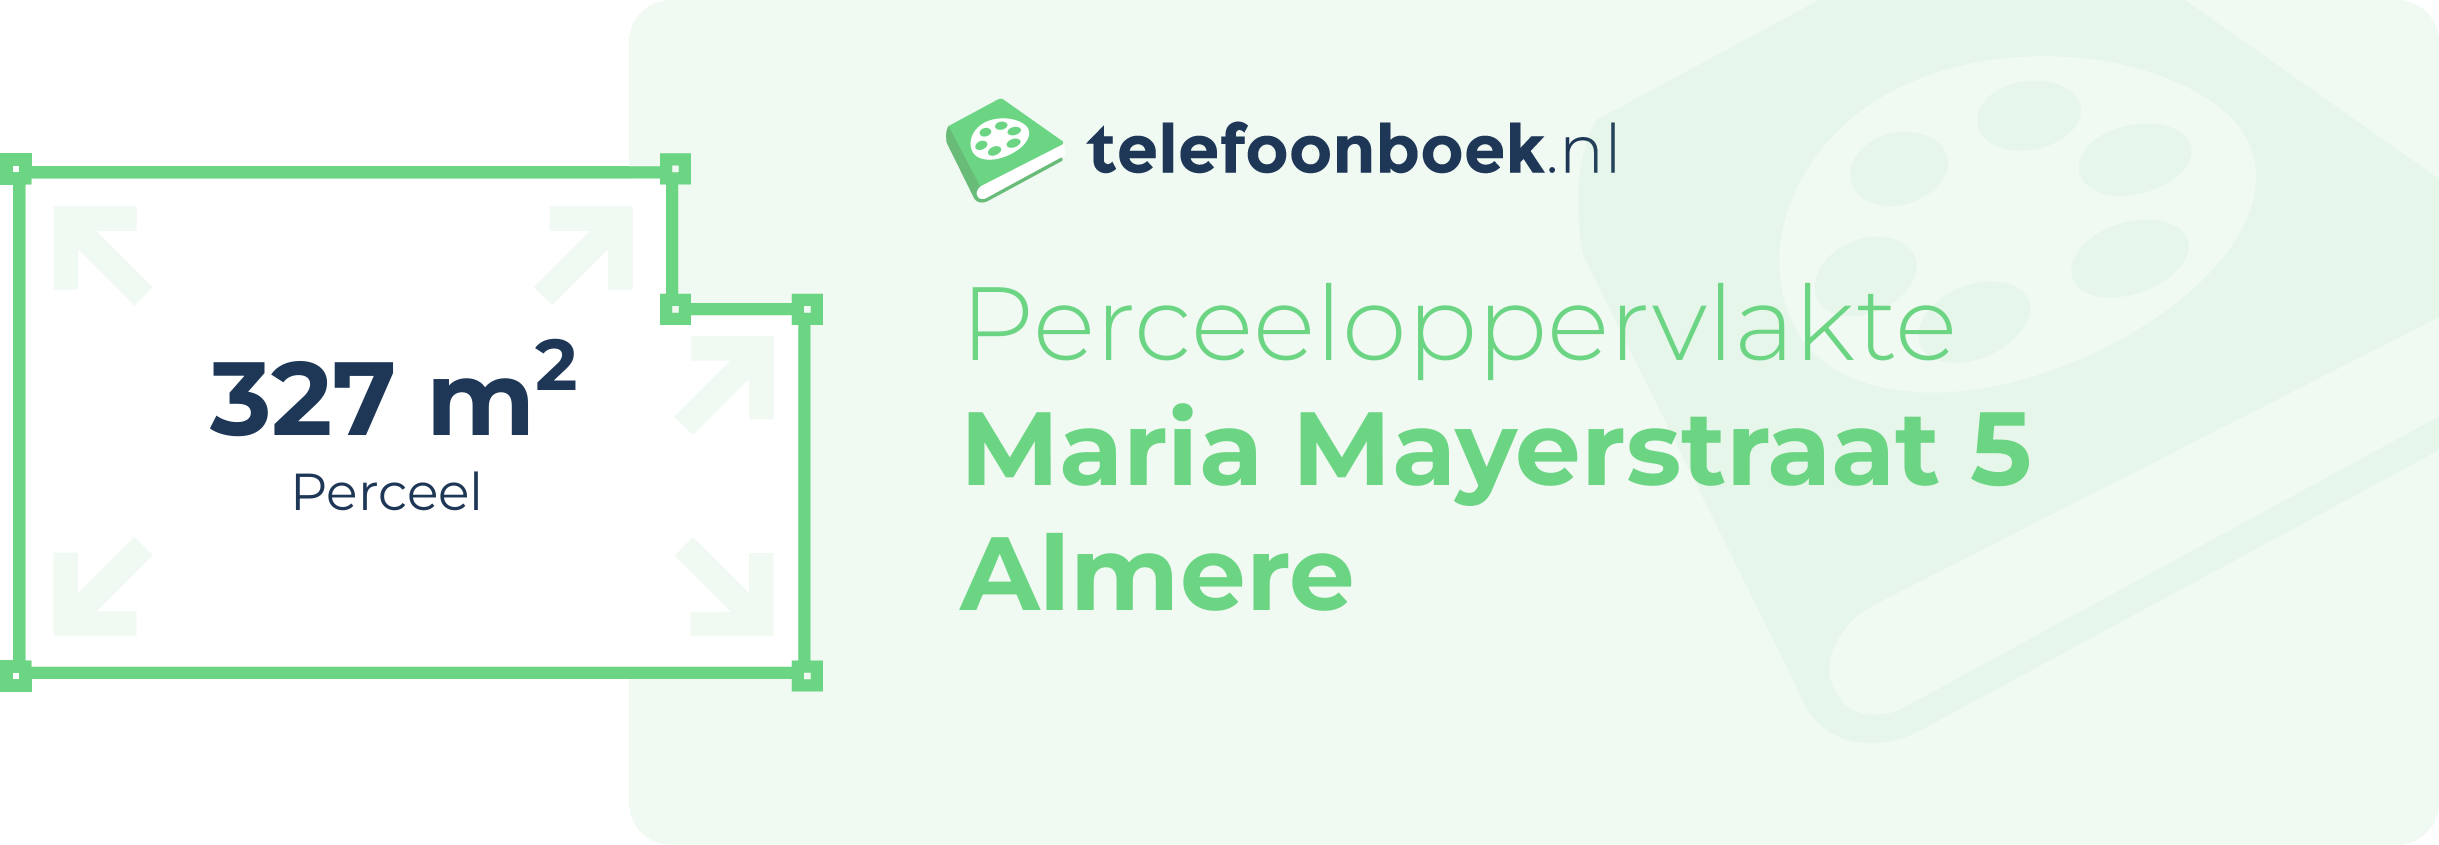 Perceeloppervlakte Maria Mayerstraat 5 Almere